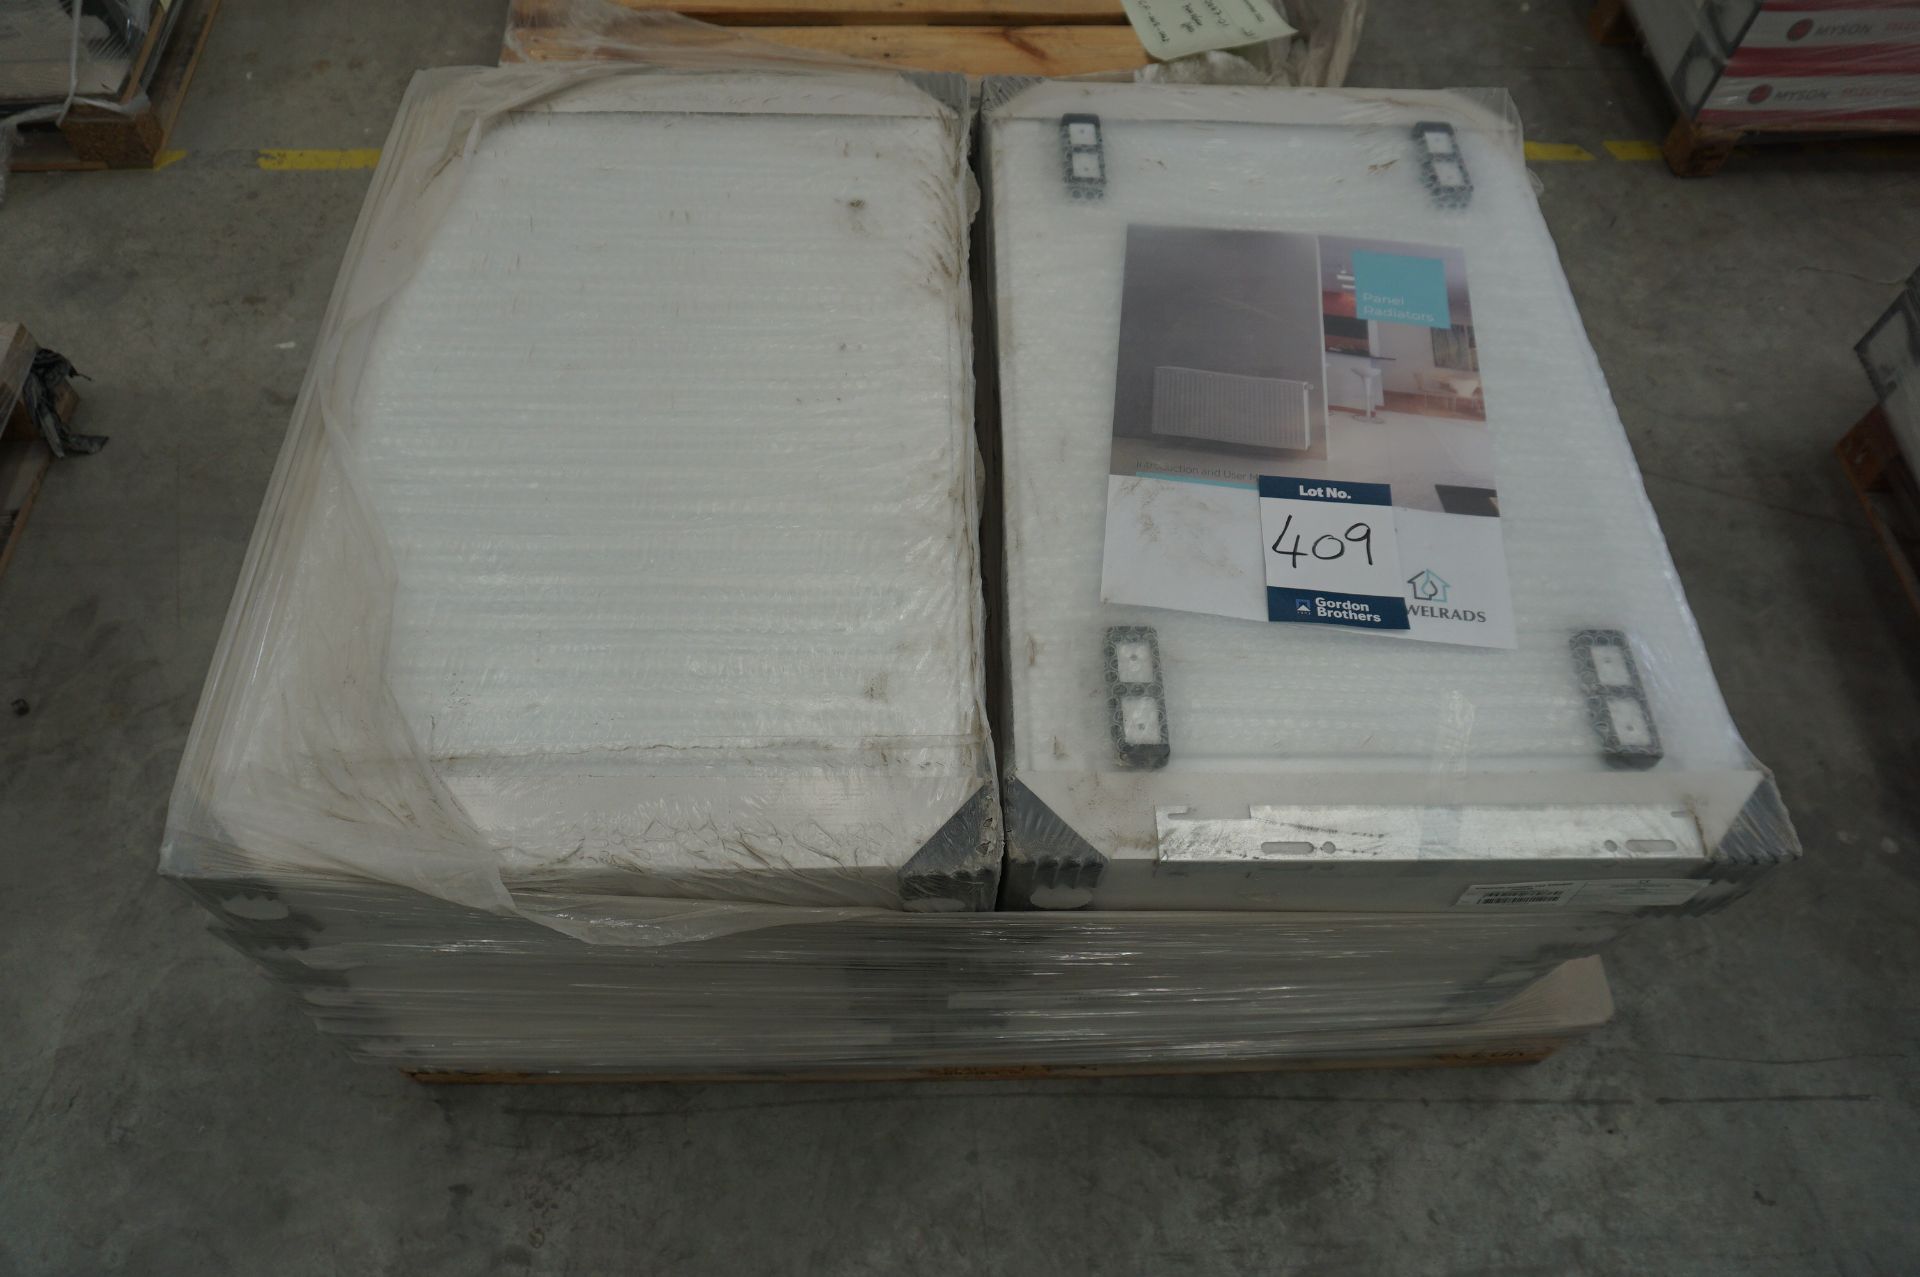 8x (no.) Towelrads, Compact T22 500 x 800mm white panel radiators, Part No. 2250080LN0113